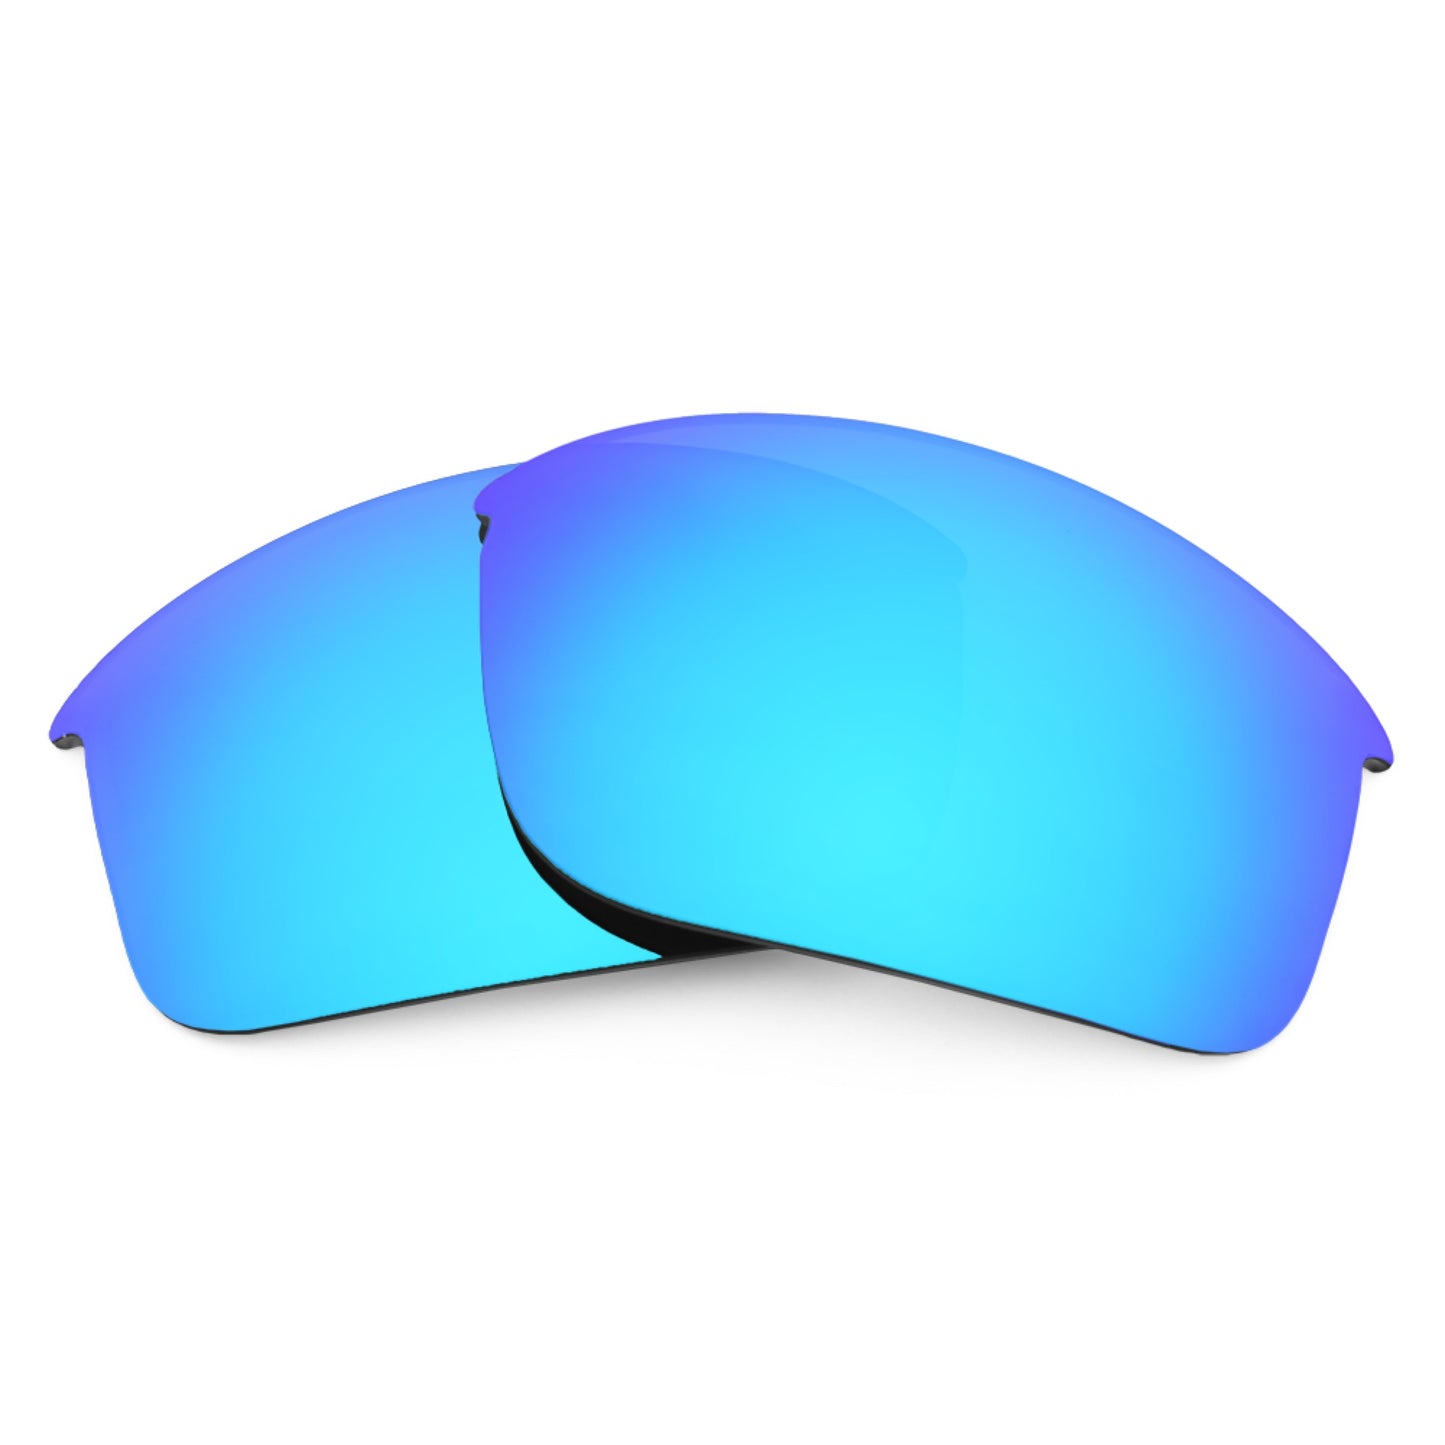 Revant replacement lenses for Oakley Wiretap (2013) Non-Polarized Ice Blue